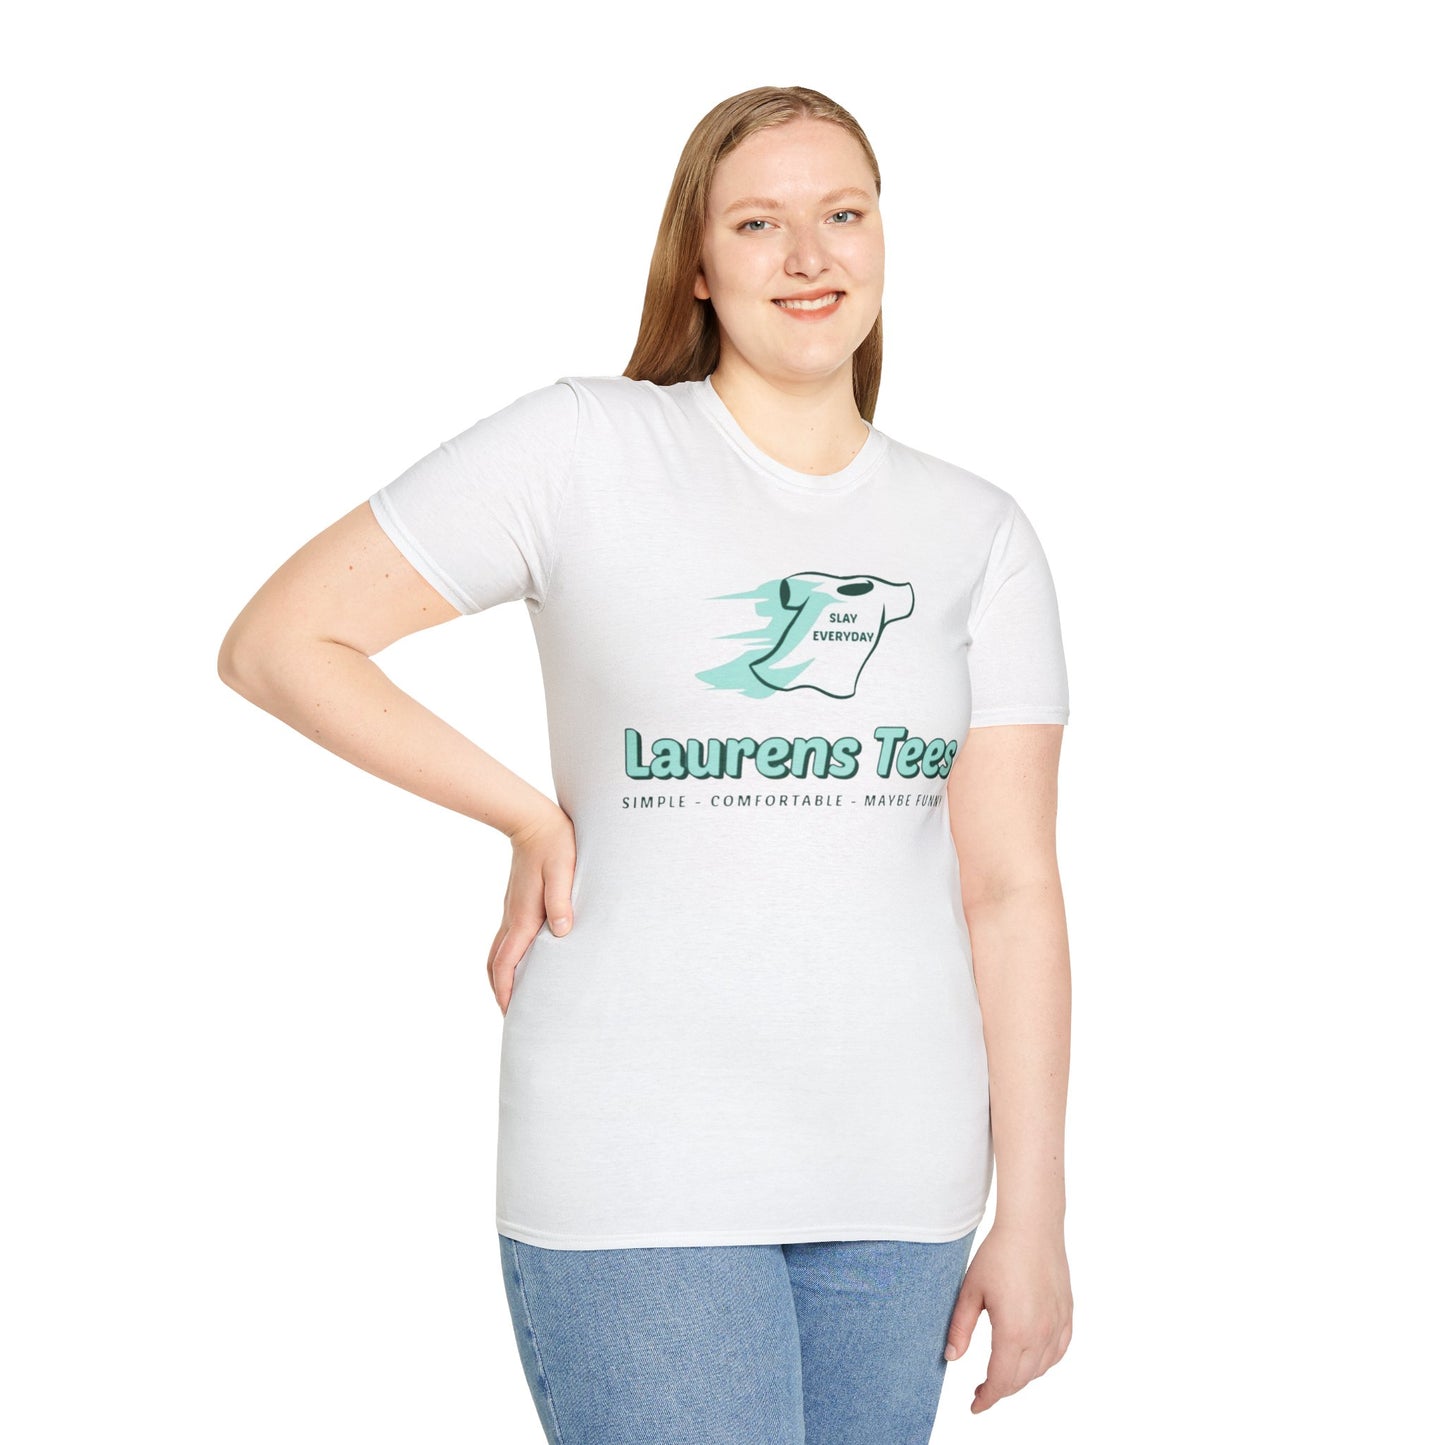 Laurens Tees Logo Shirt - Unisex Softstyle T-Shirt